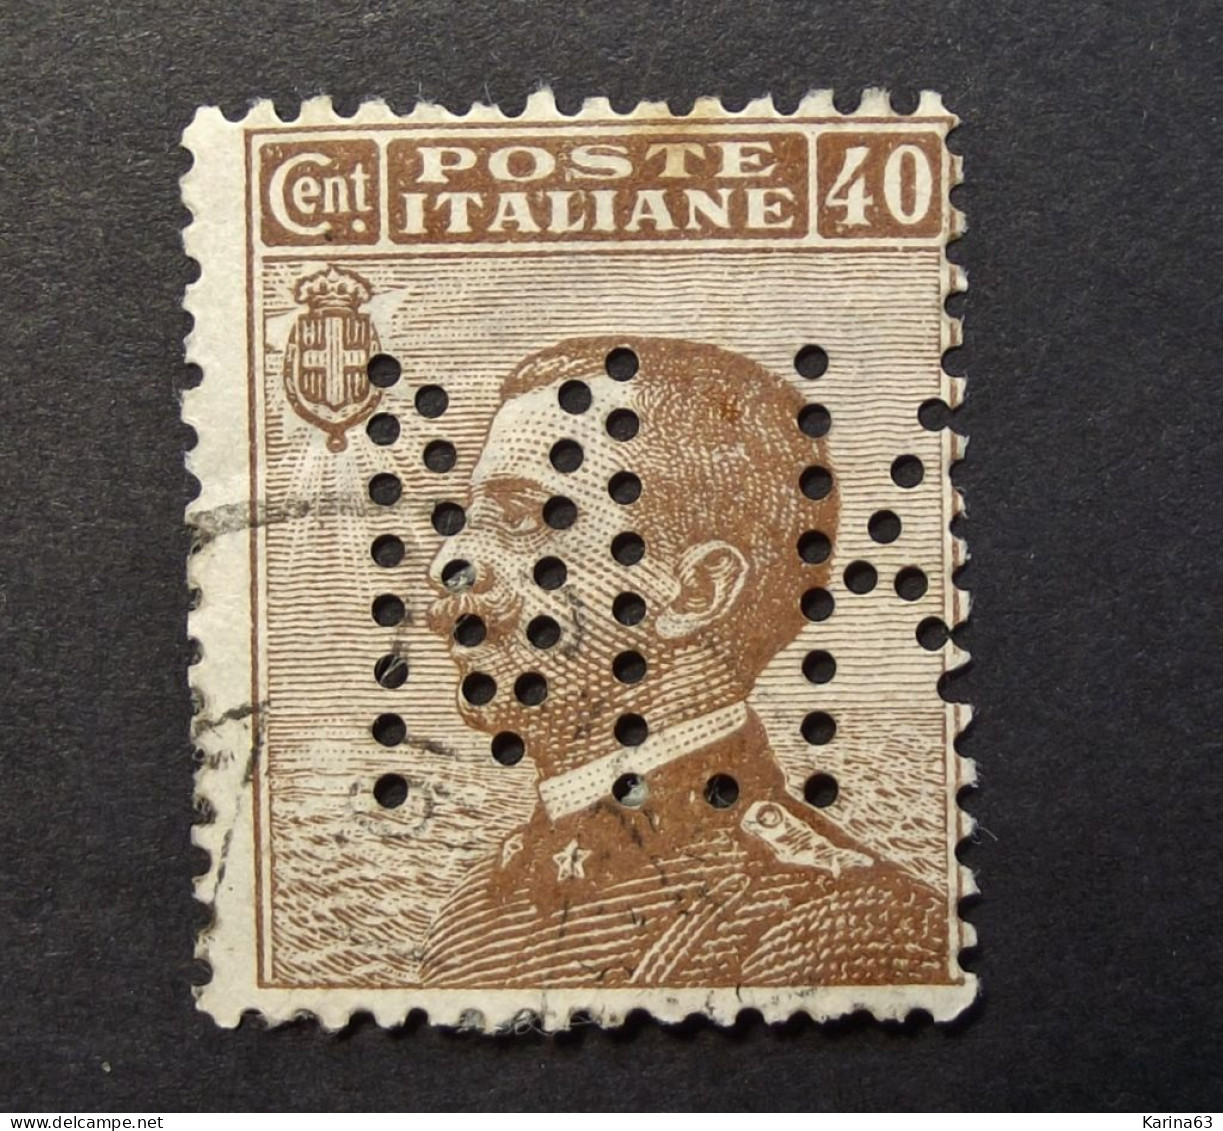 Italia - Italy - 1906 -  Perfin - Lochung -  M.K -   Moroni E Keller - Venezia  -  Cancelled - Gebraucht